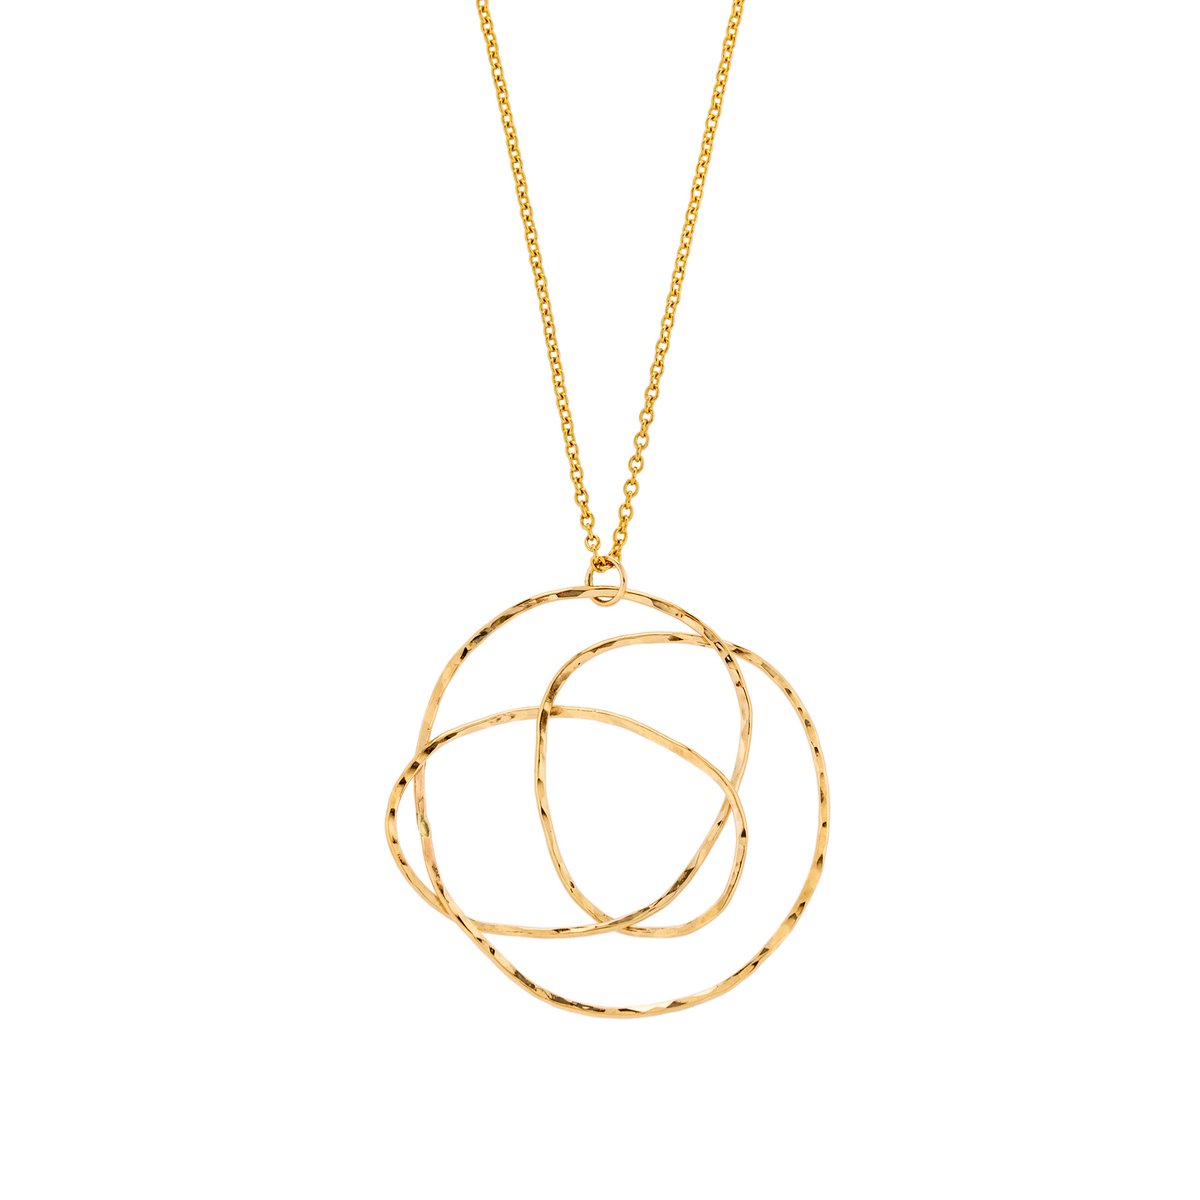 Image of Callisto pendant